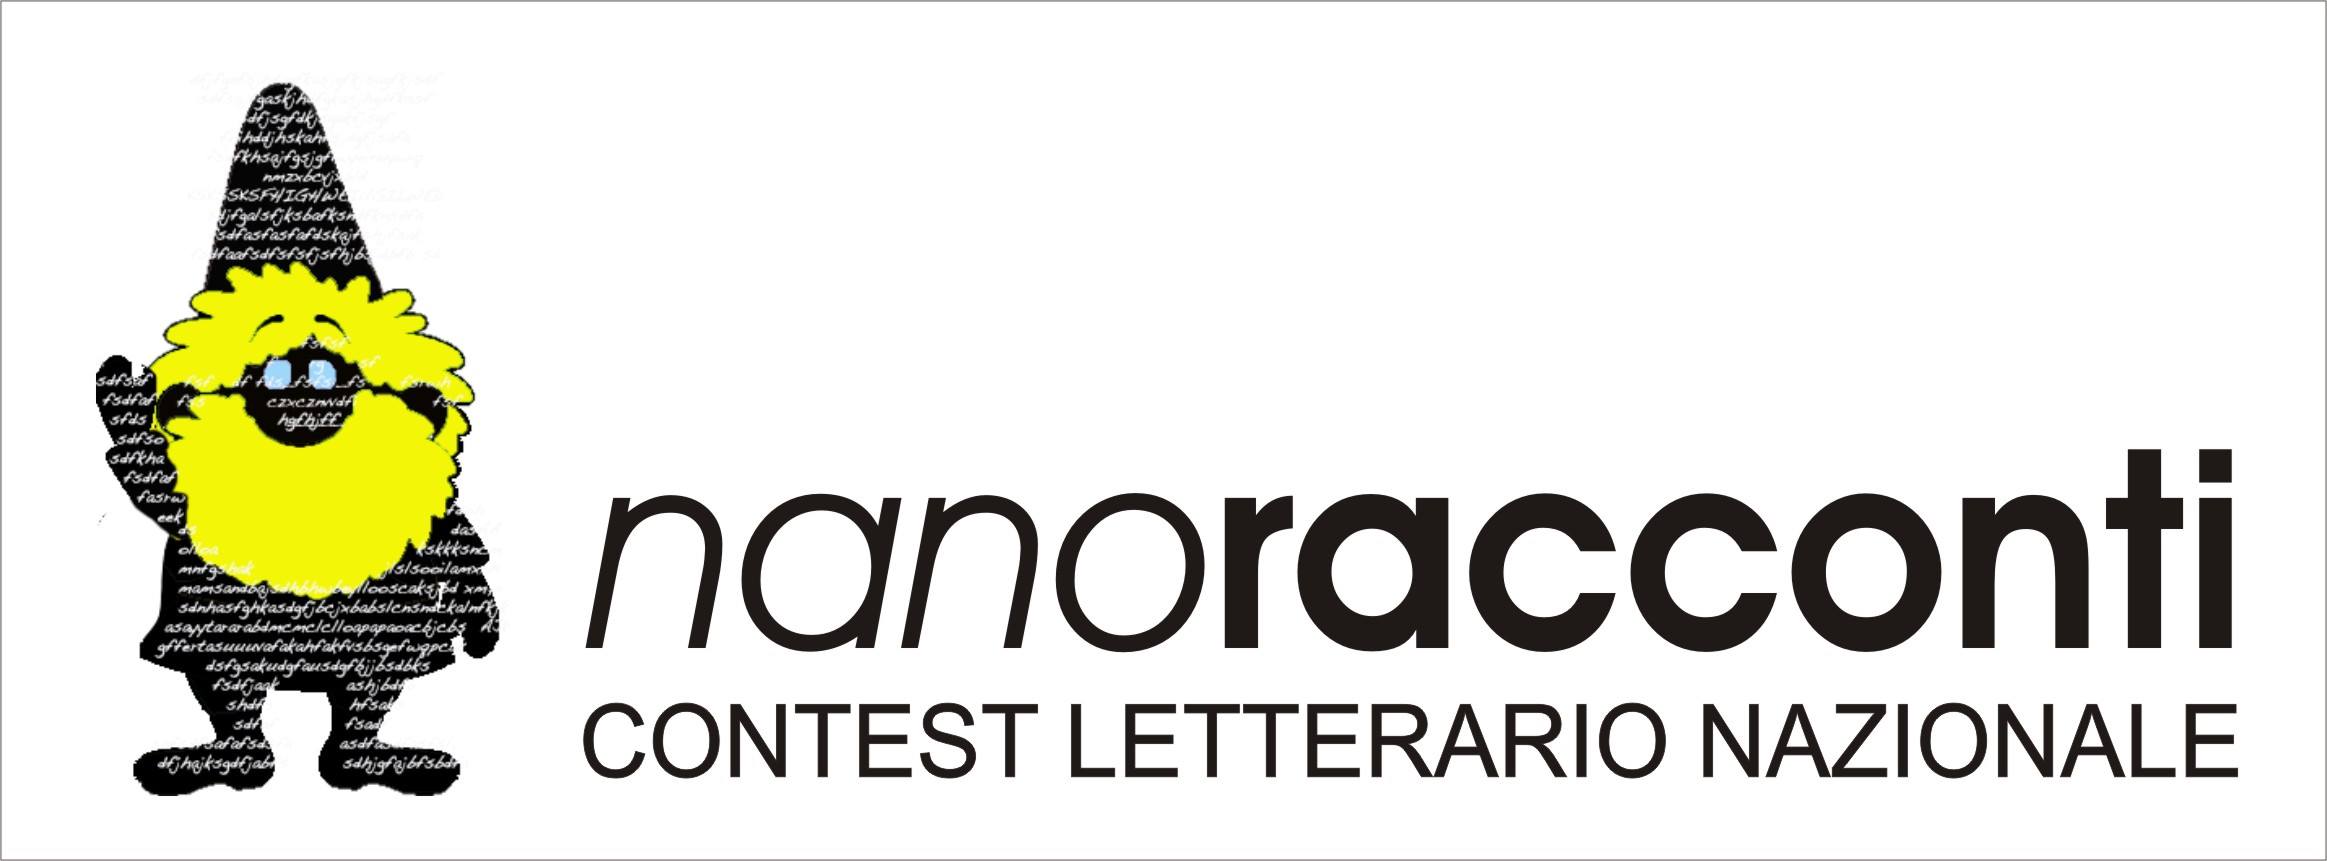 https://www.zerottounonews.it/wp-content/uploads/2014/09/logo_nanoracconti.jpg